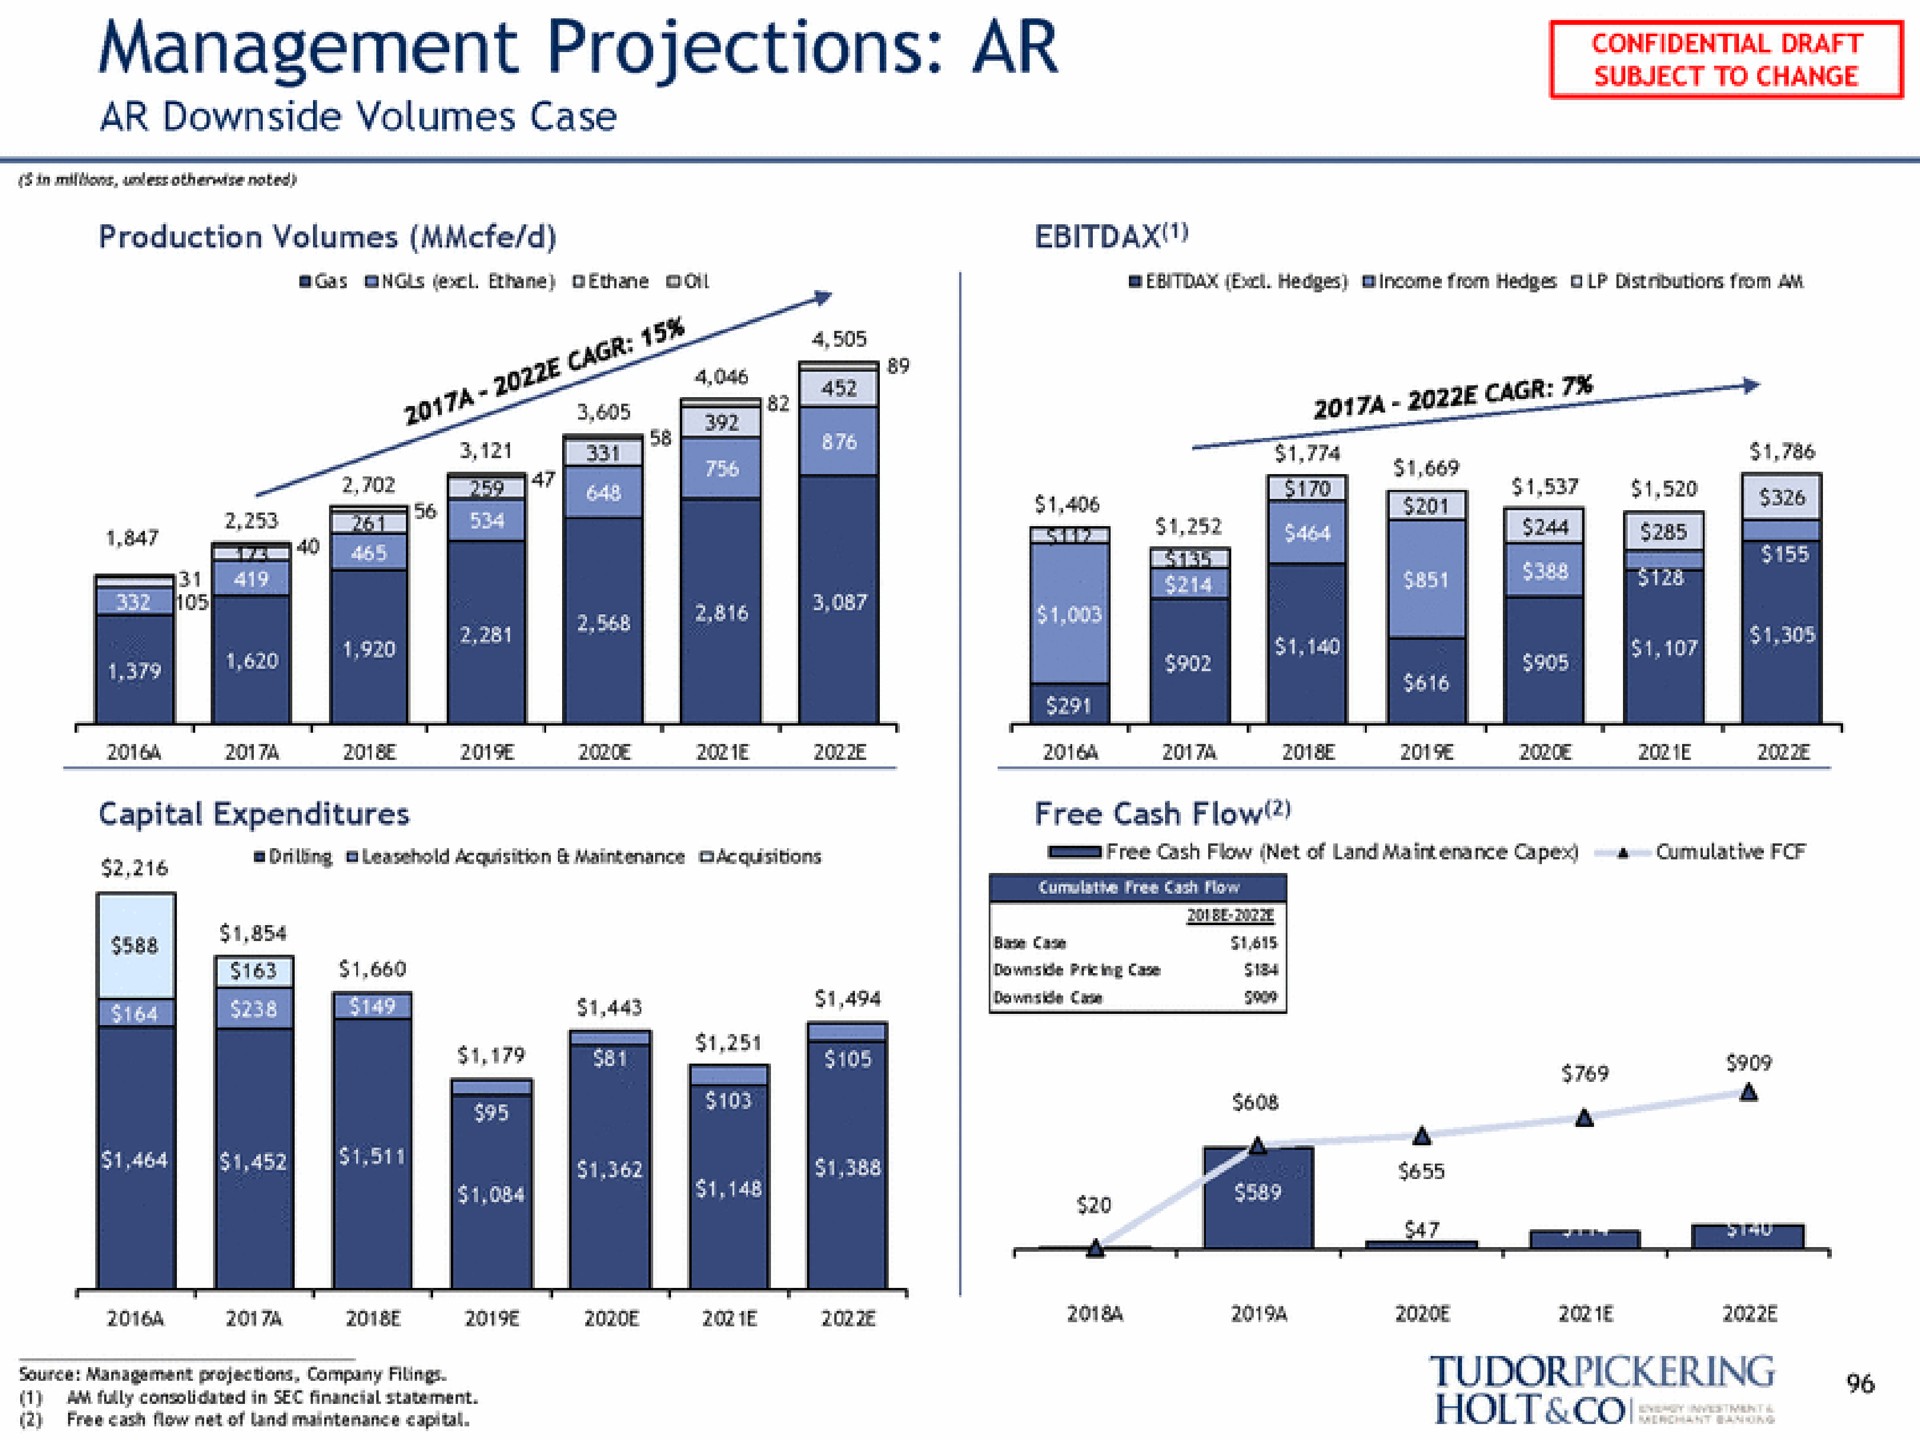 management projections a | Tudor, Pickering, Holt & Co